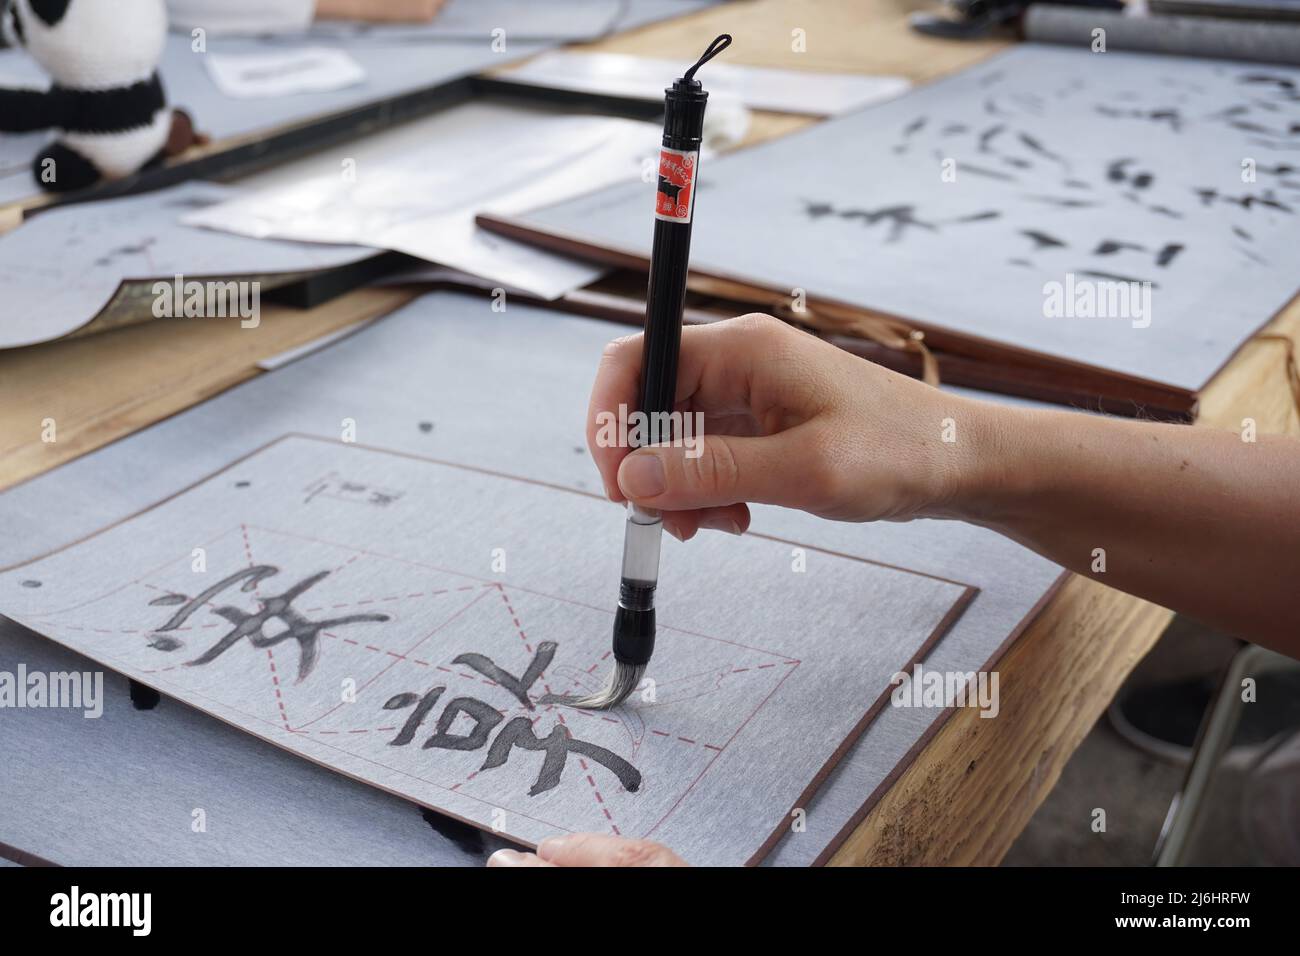 Shodo Japanese calligraphy brush writing process learning, study of hieroglyphs Stock Photo